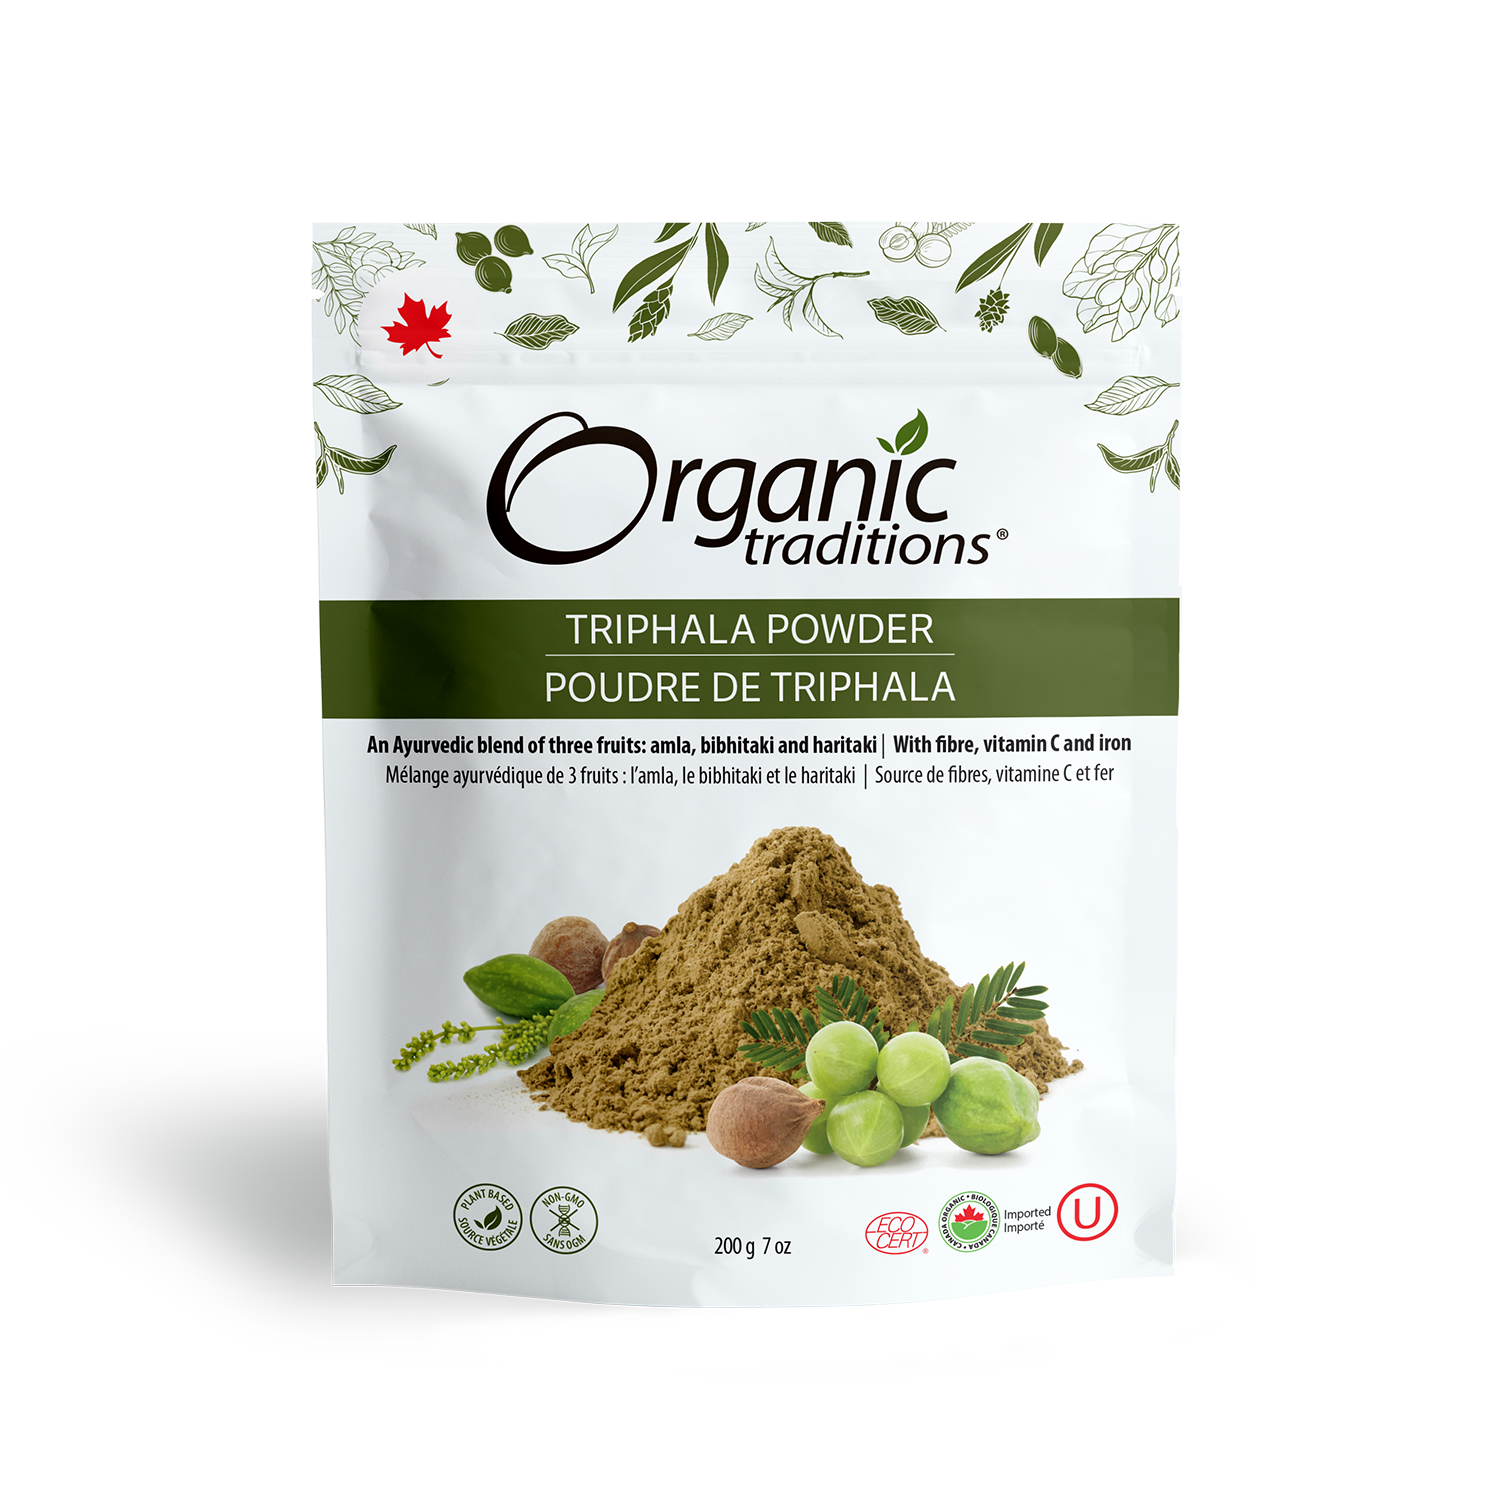 organic traditions triphala powder front of bag image